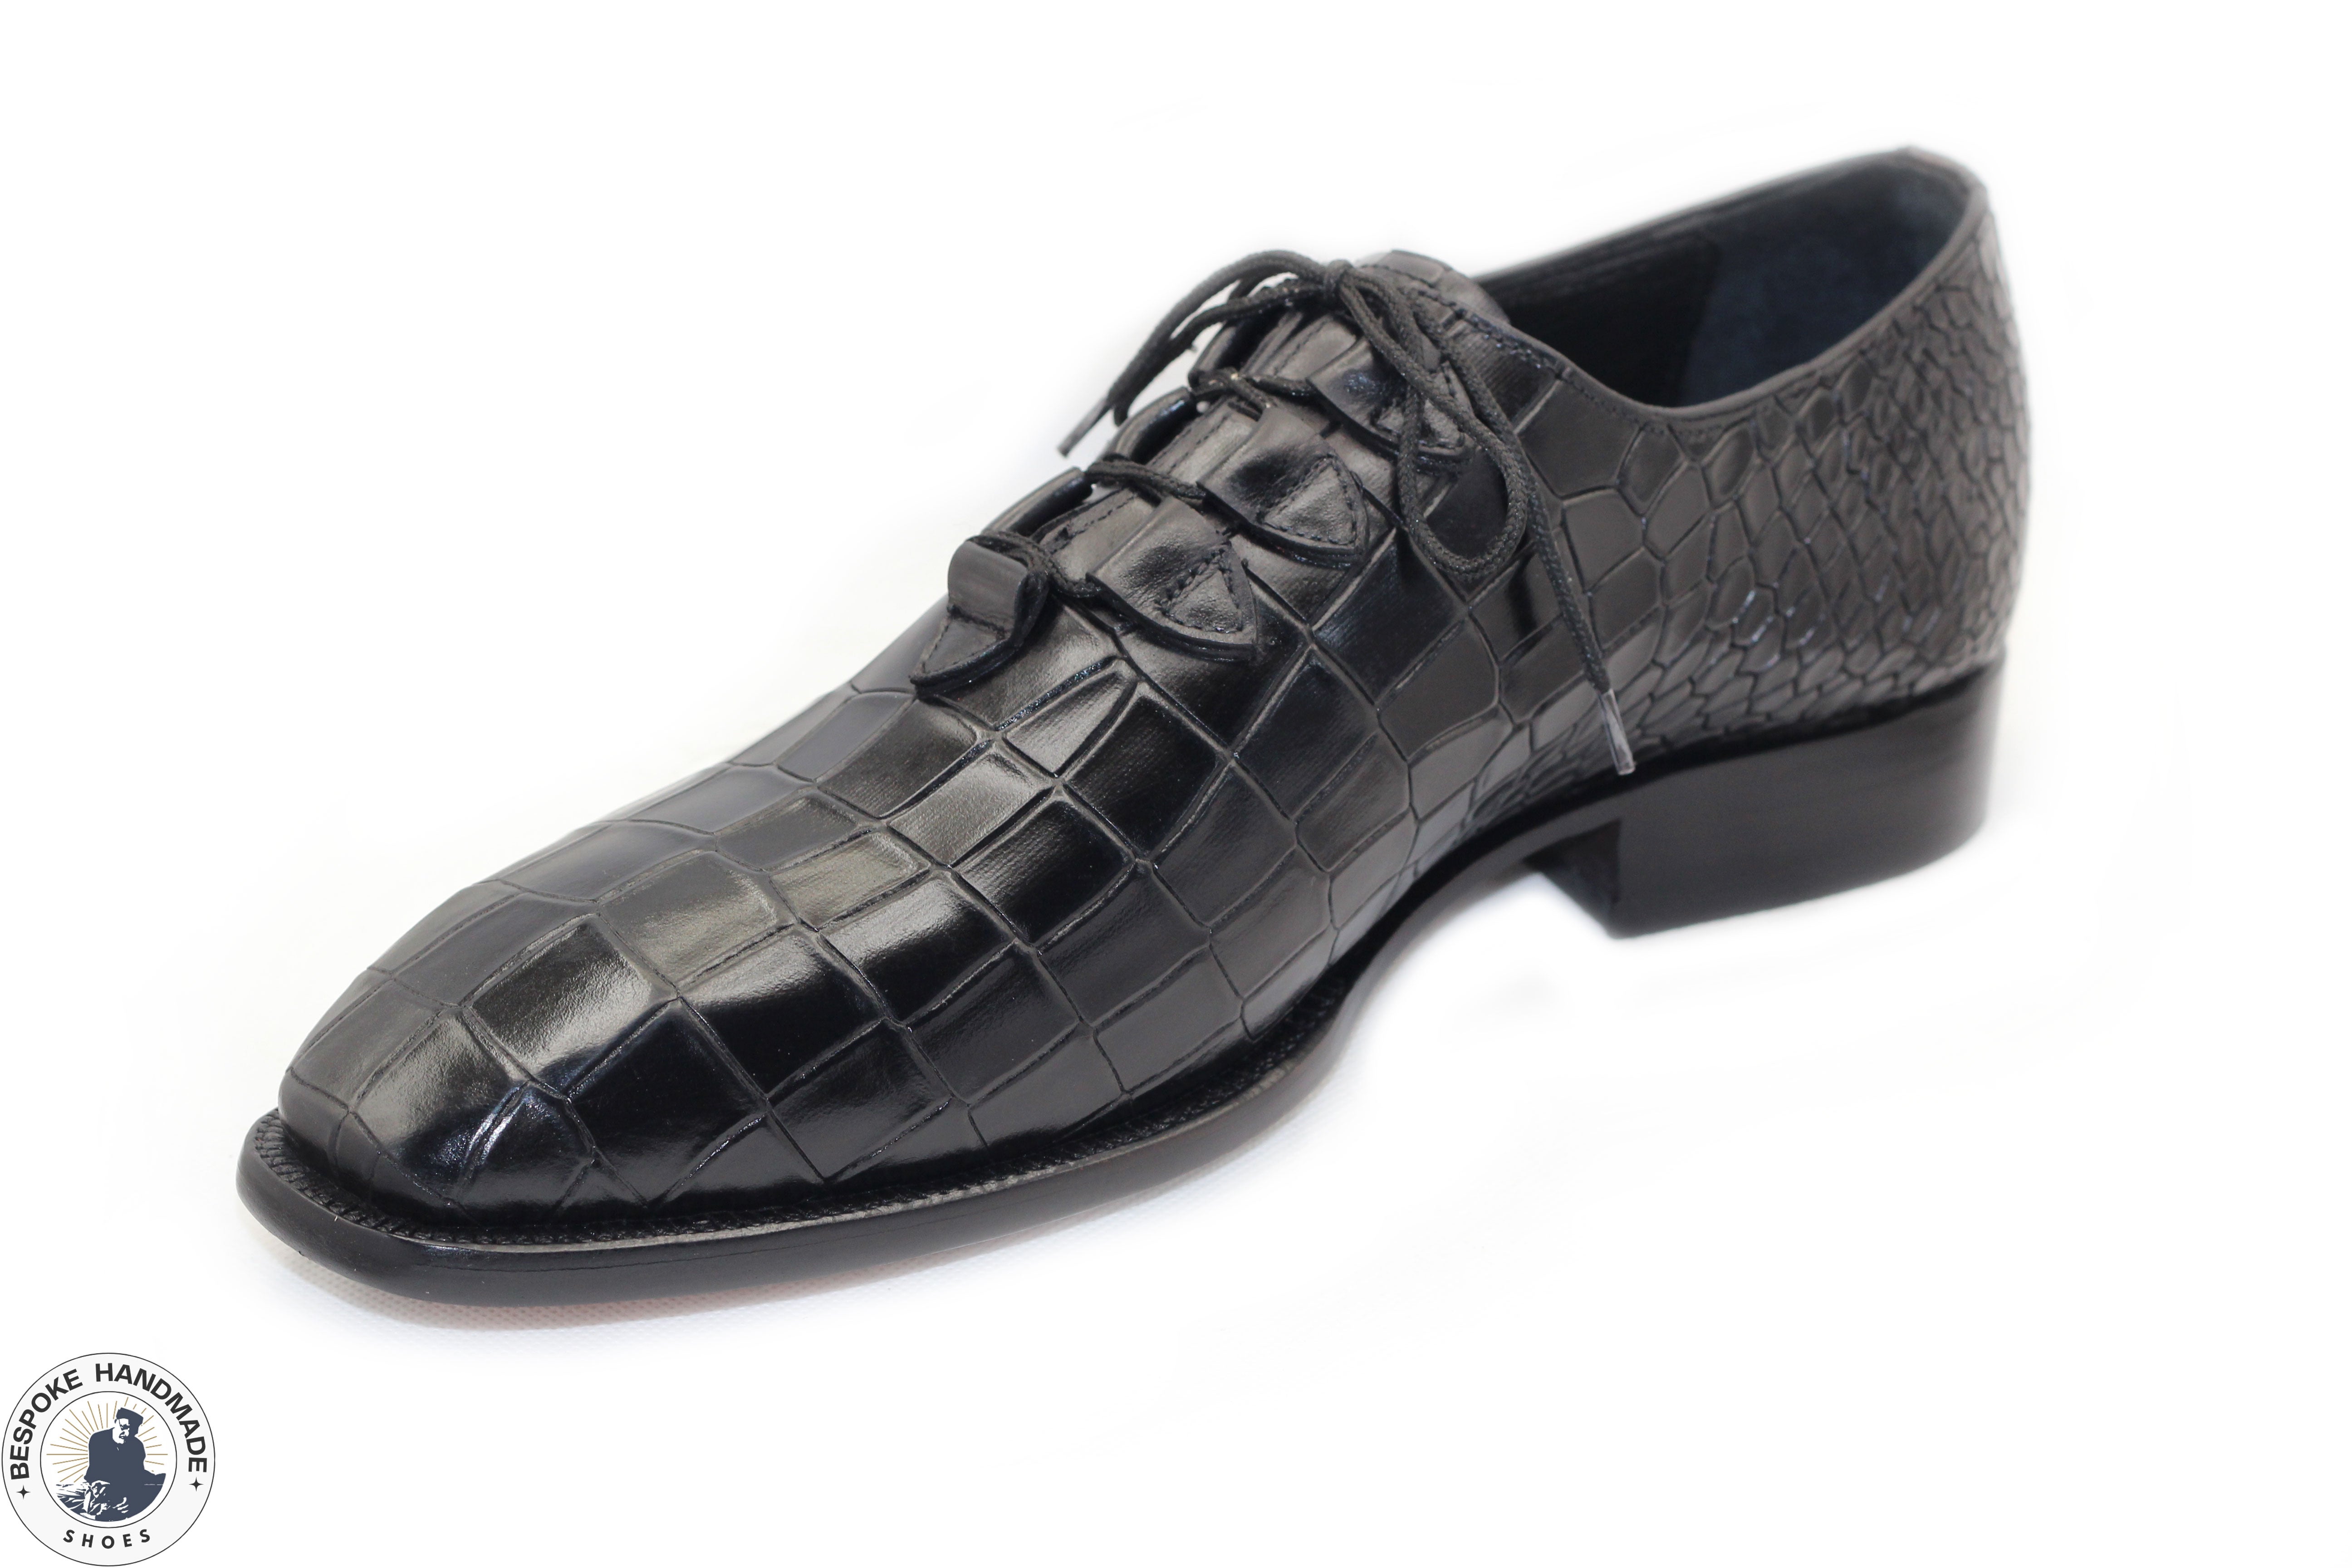 Tailor Made Men's Black Crocodile Leather Oxford Toe Cap Brogue Stylish,Dress Shoes For Men's